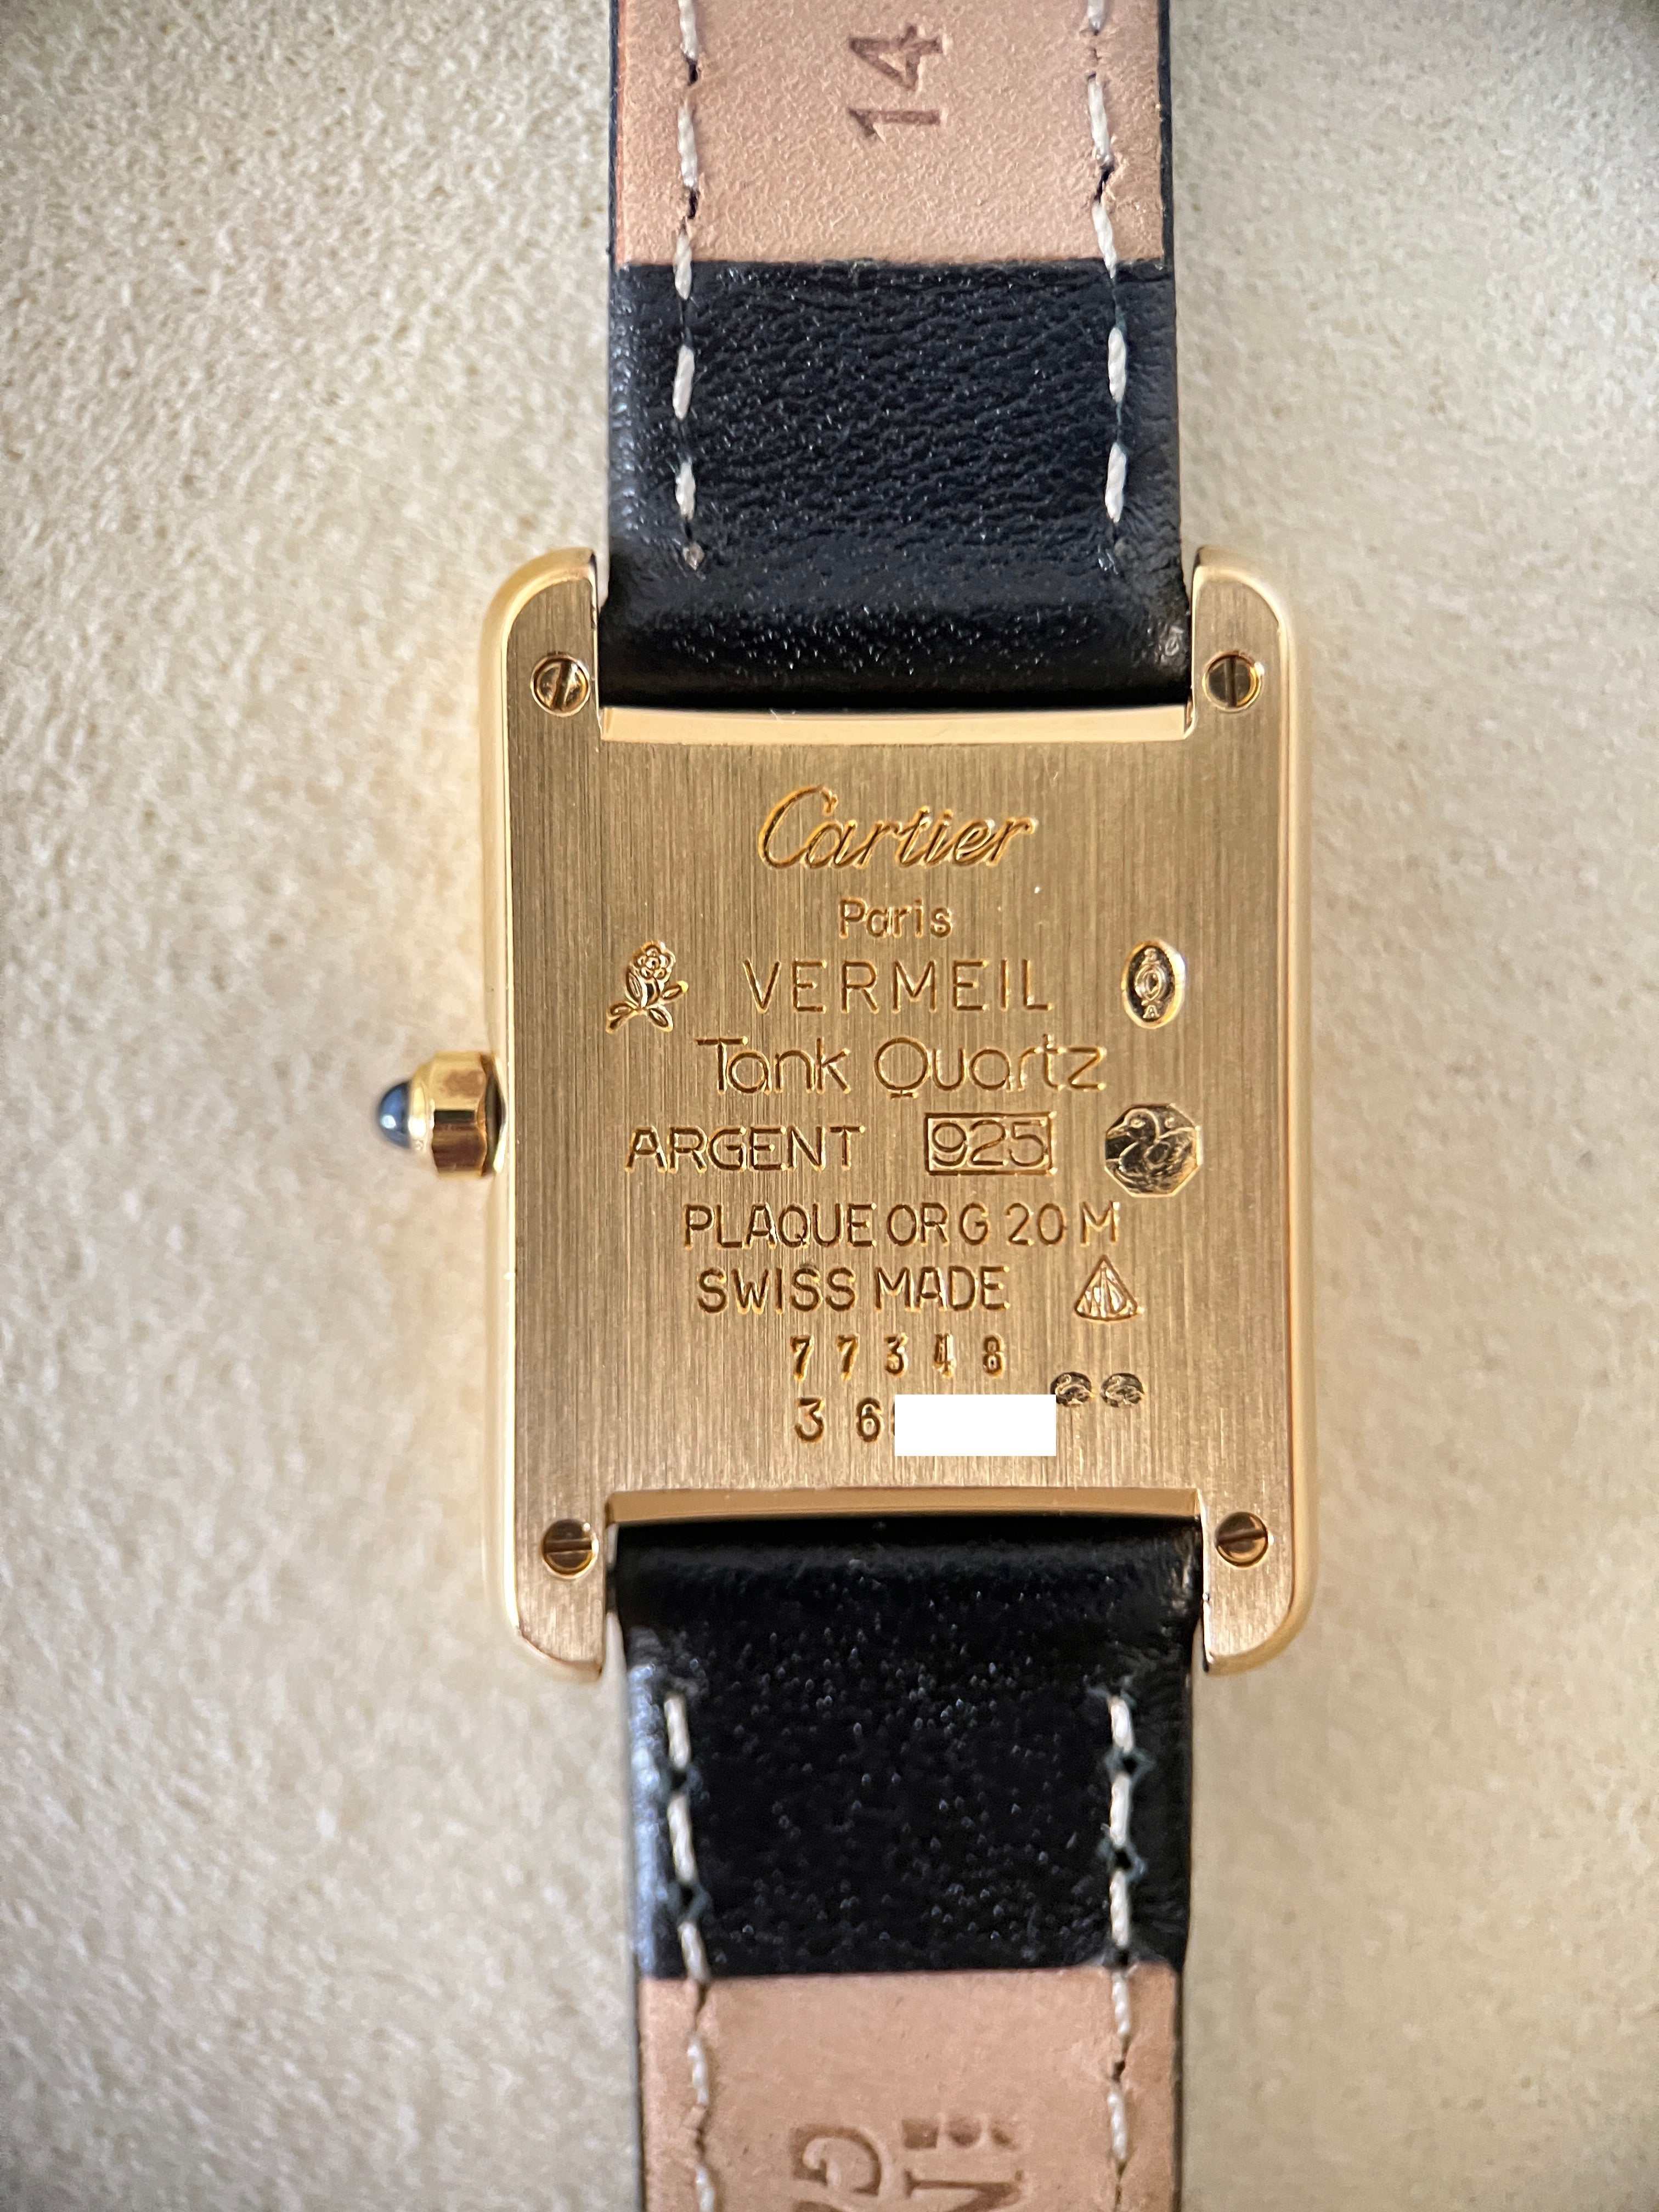 Must de Cartier Tank Ladies Vintage Watch, Size SM, Sterling Silver with 18K Vermeil Multi Stripe